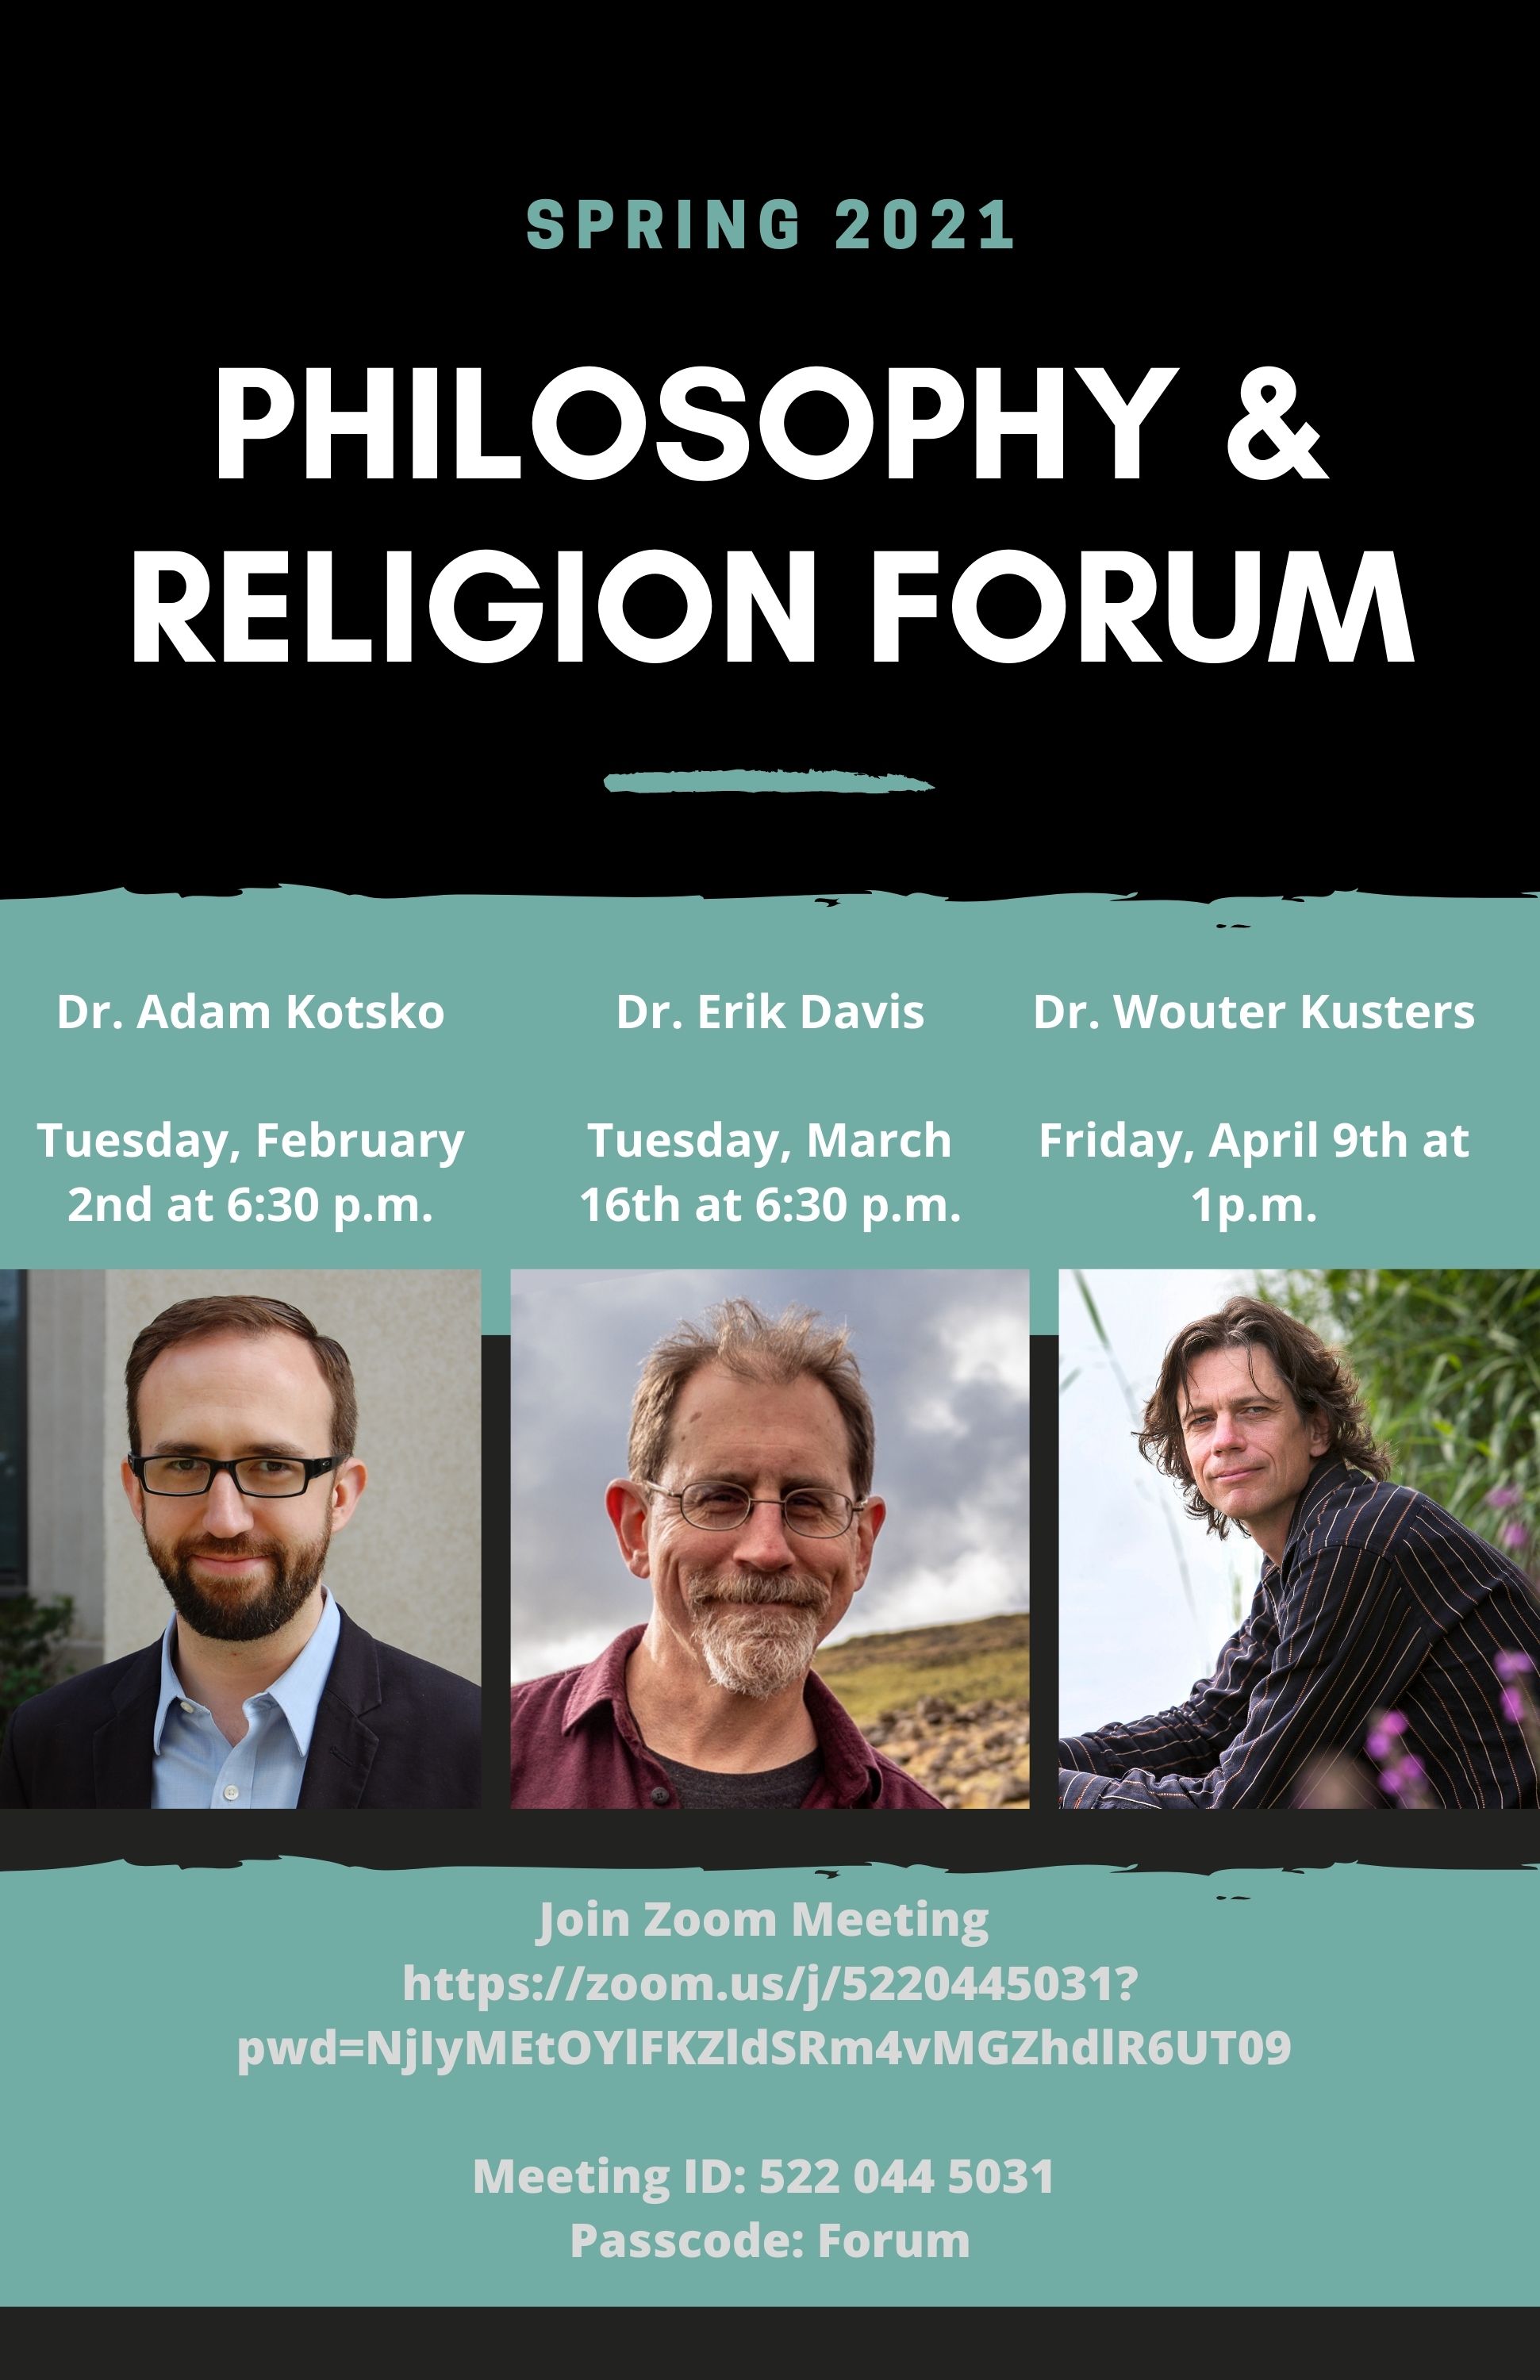 Philosophy & Religion Forum Spring 2021 poster